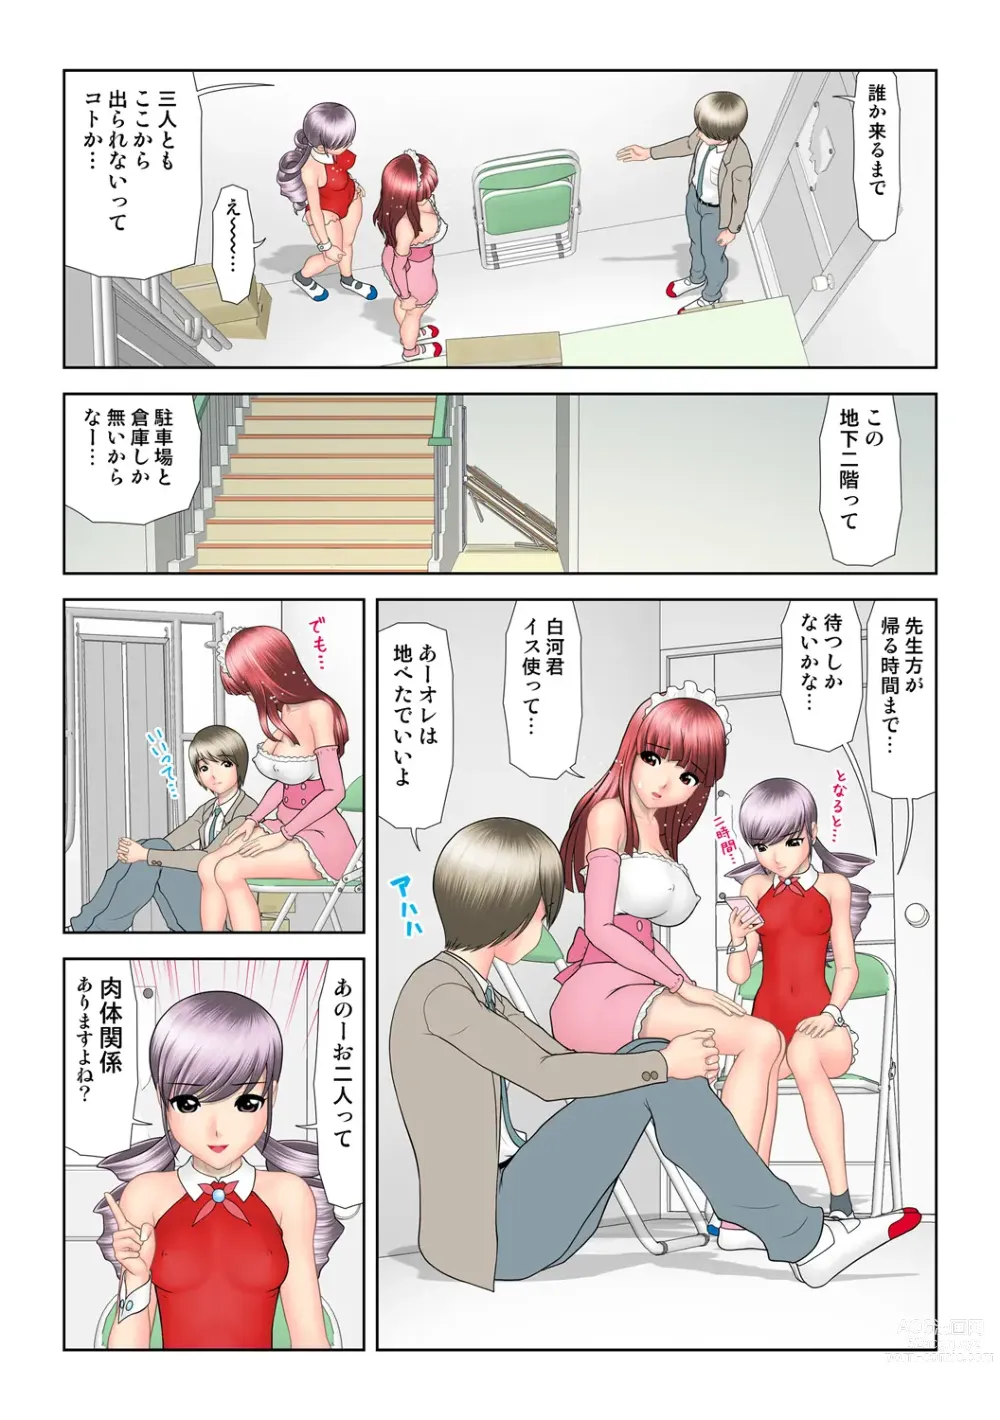 Page 106 of manga HiME-Mania Vol. 48